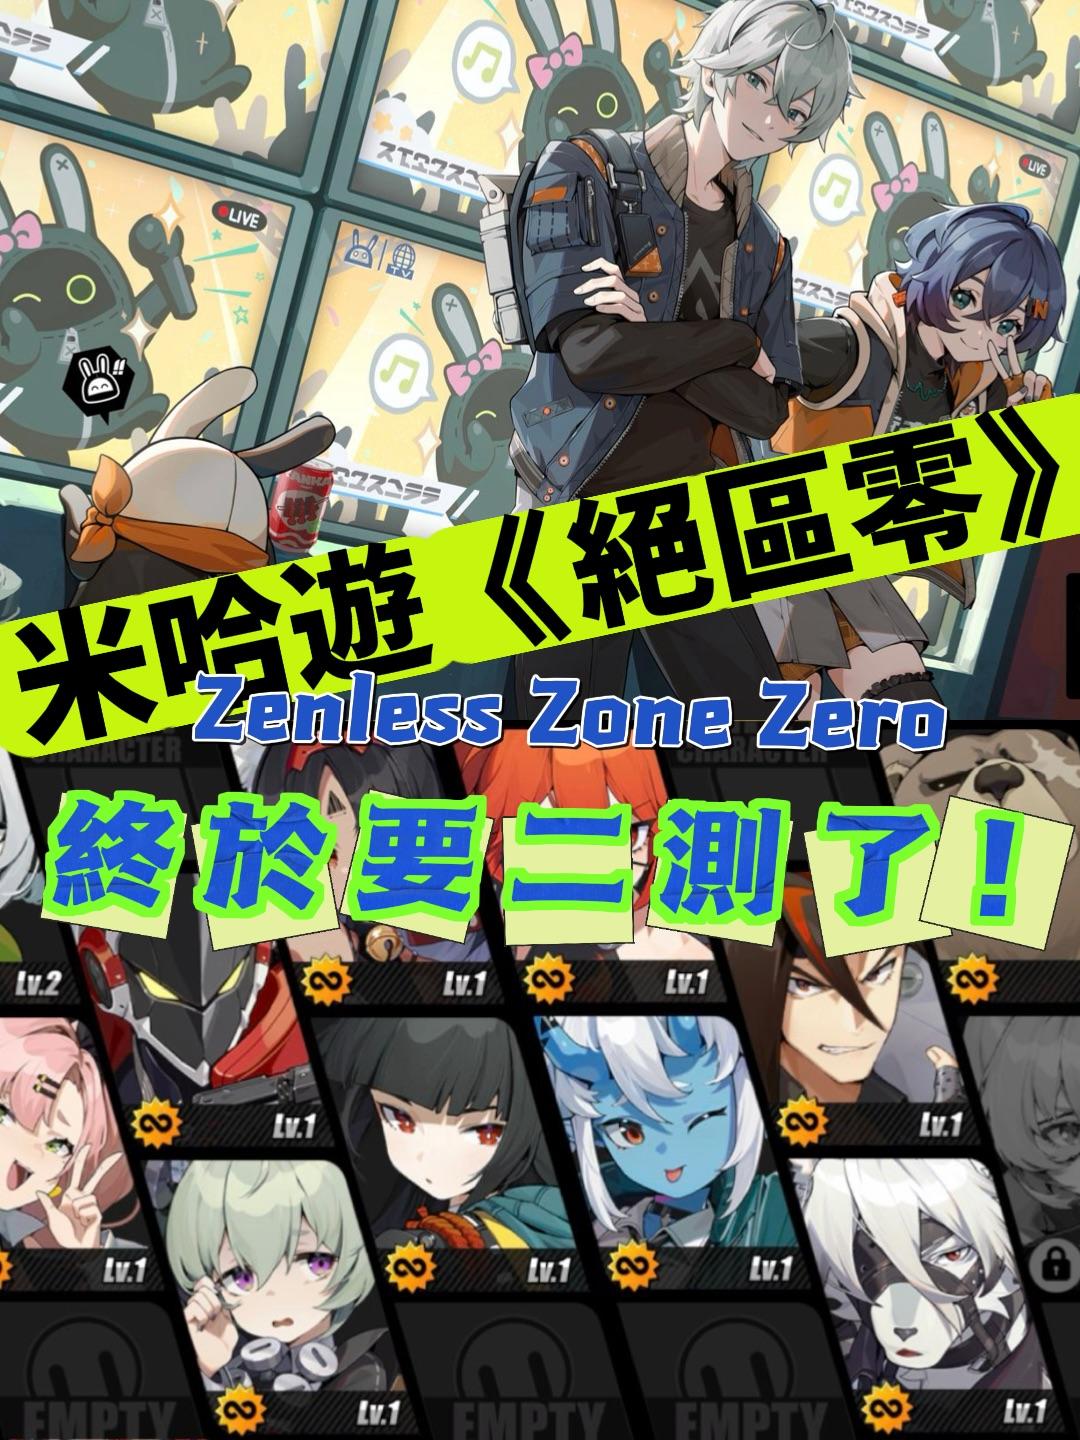 Zenless Zone Zero hosts special showcase at TGS - Zenless Zone Zero - TapTap